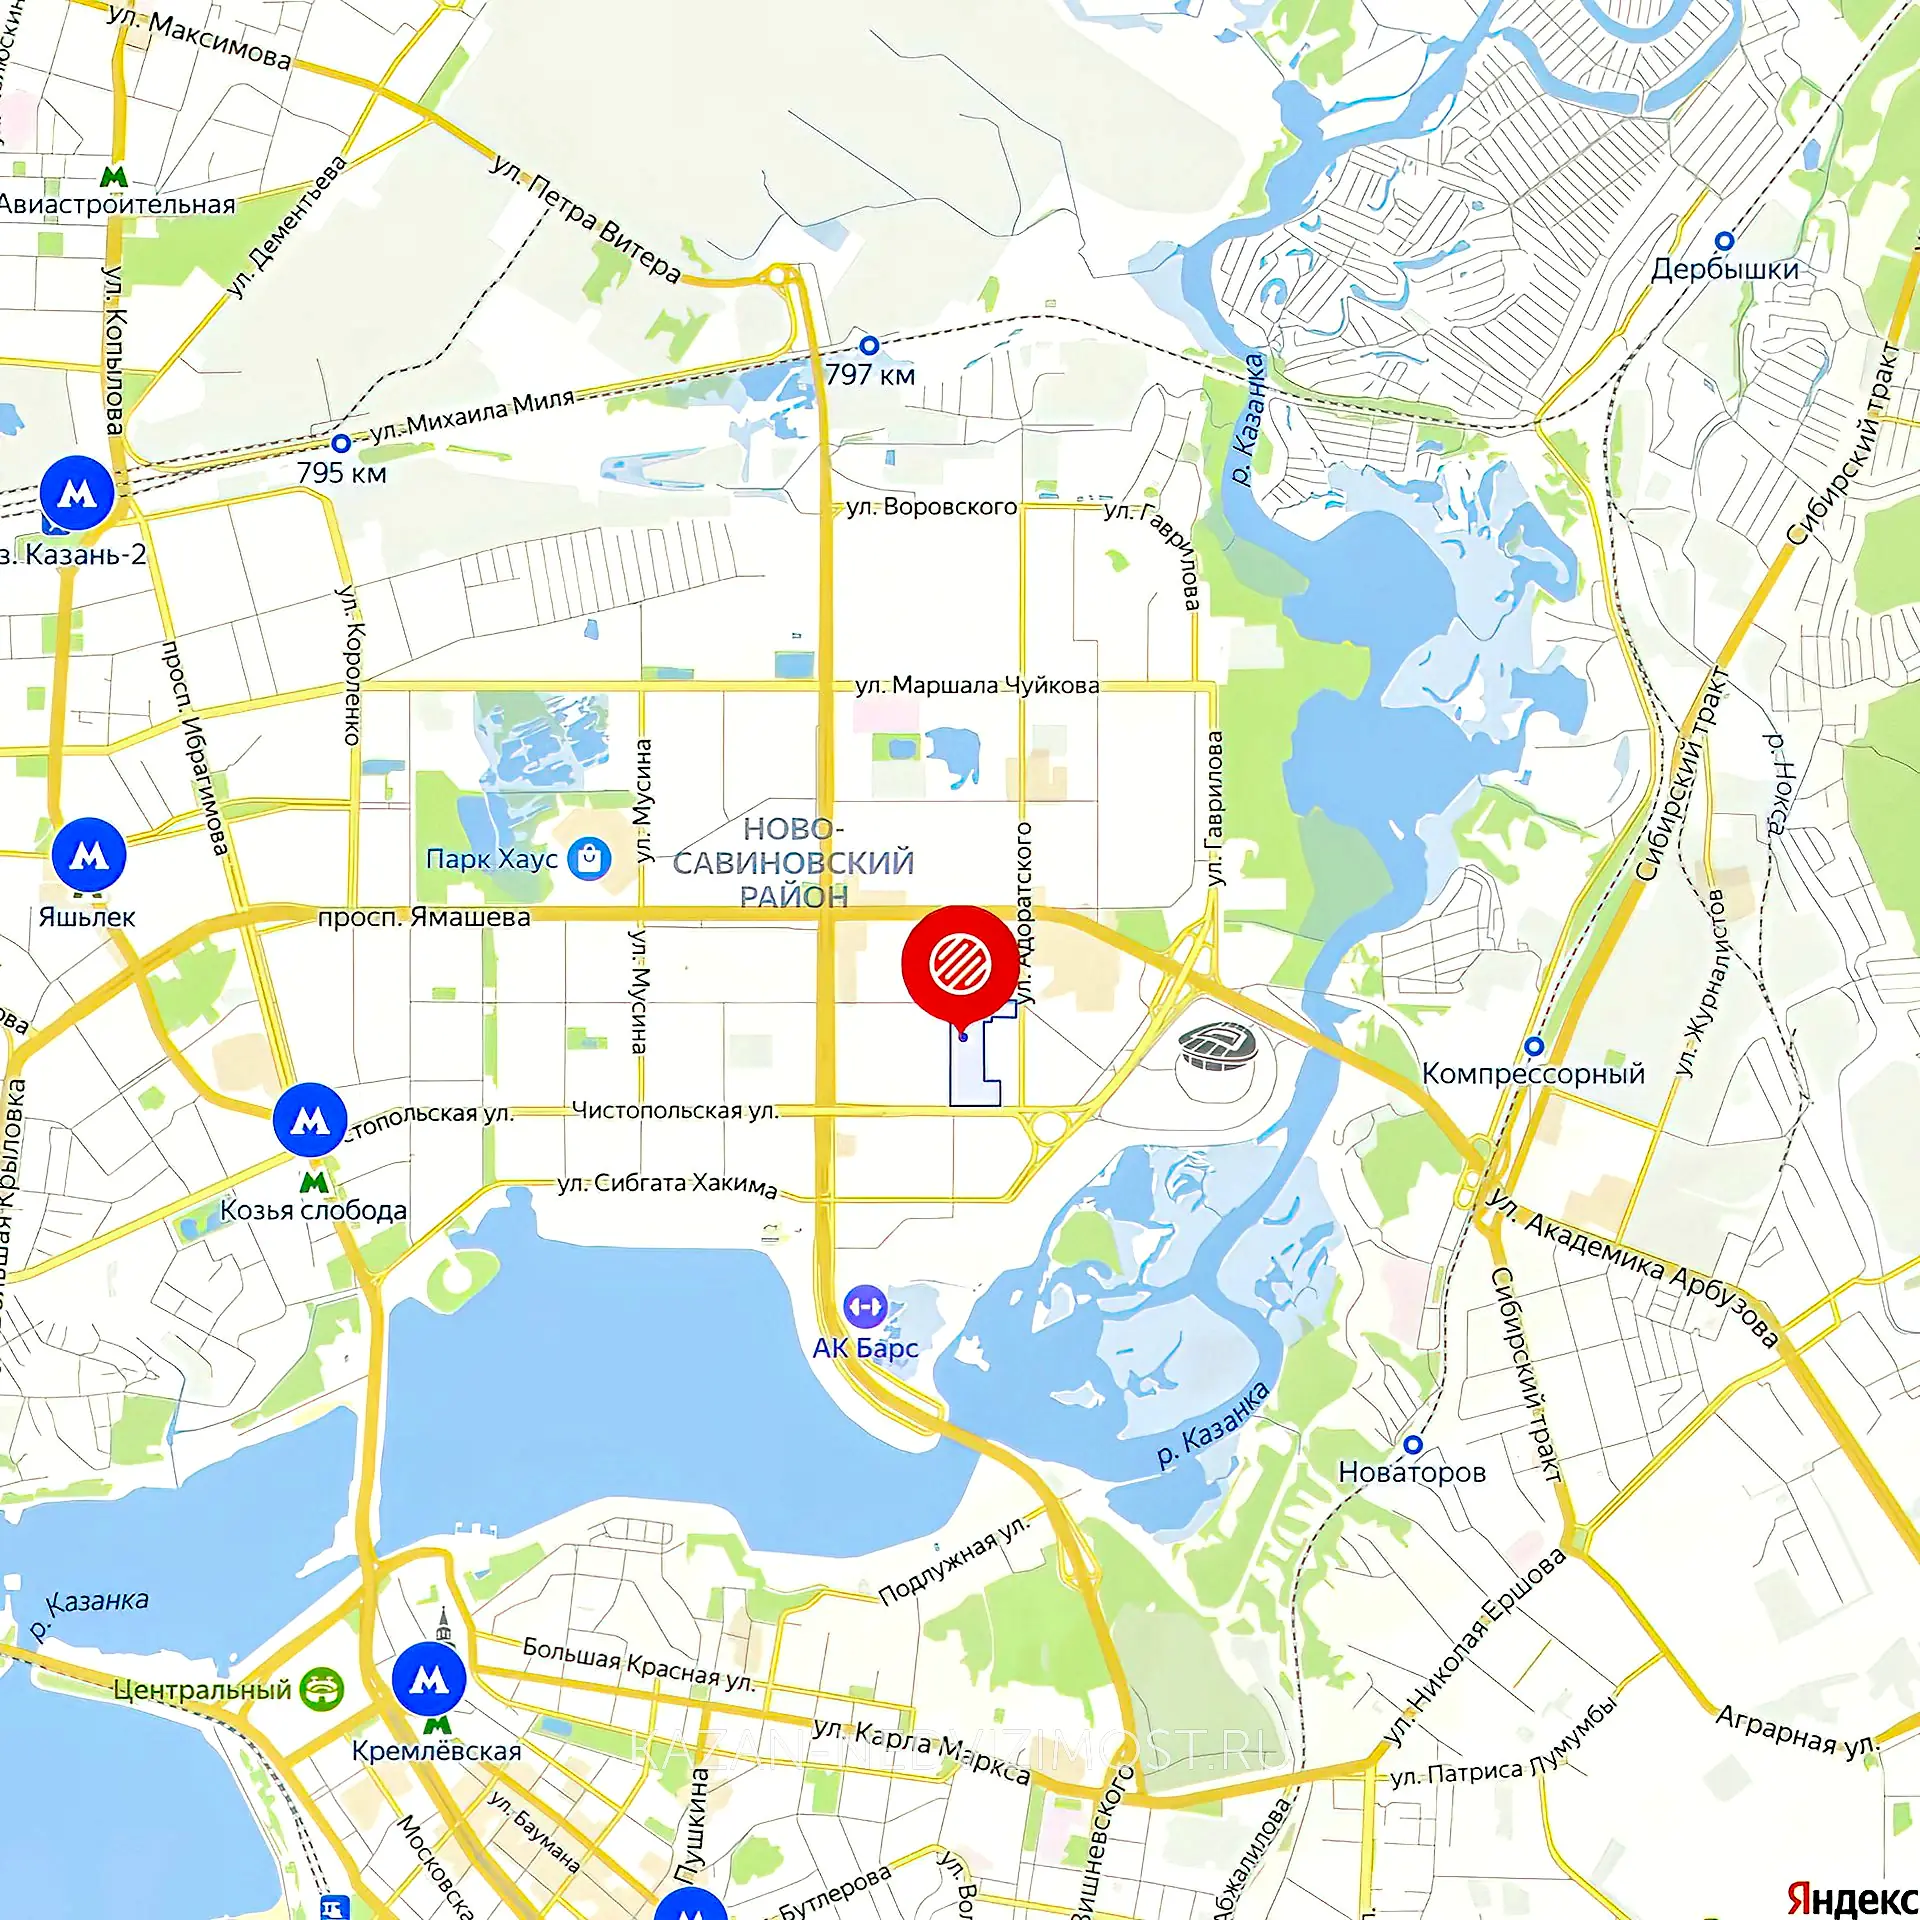 Расположение и маршрут на карте от ЖК Золотая середина до центра города